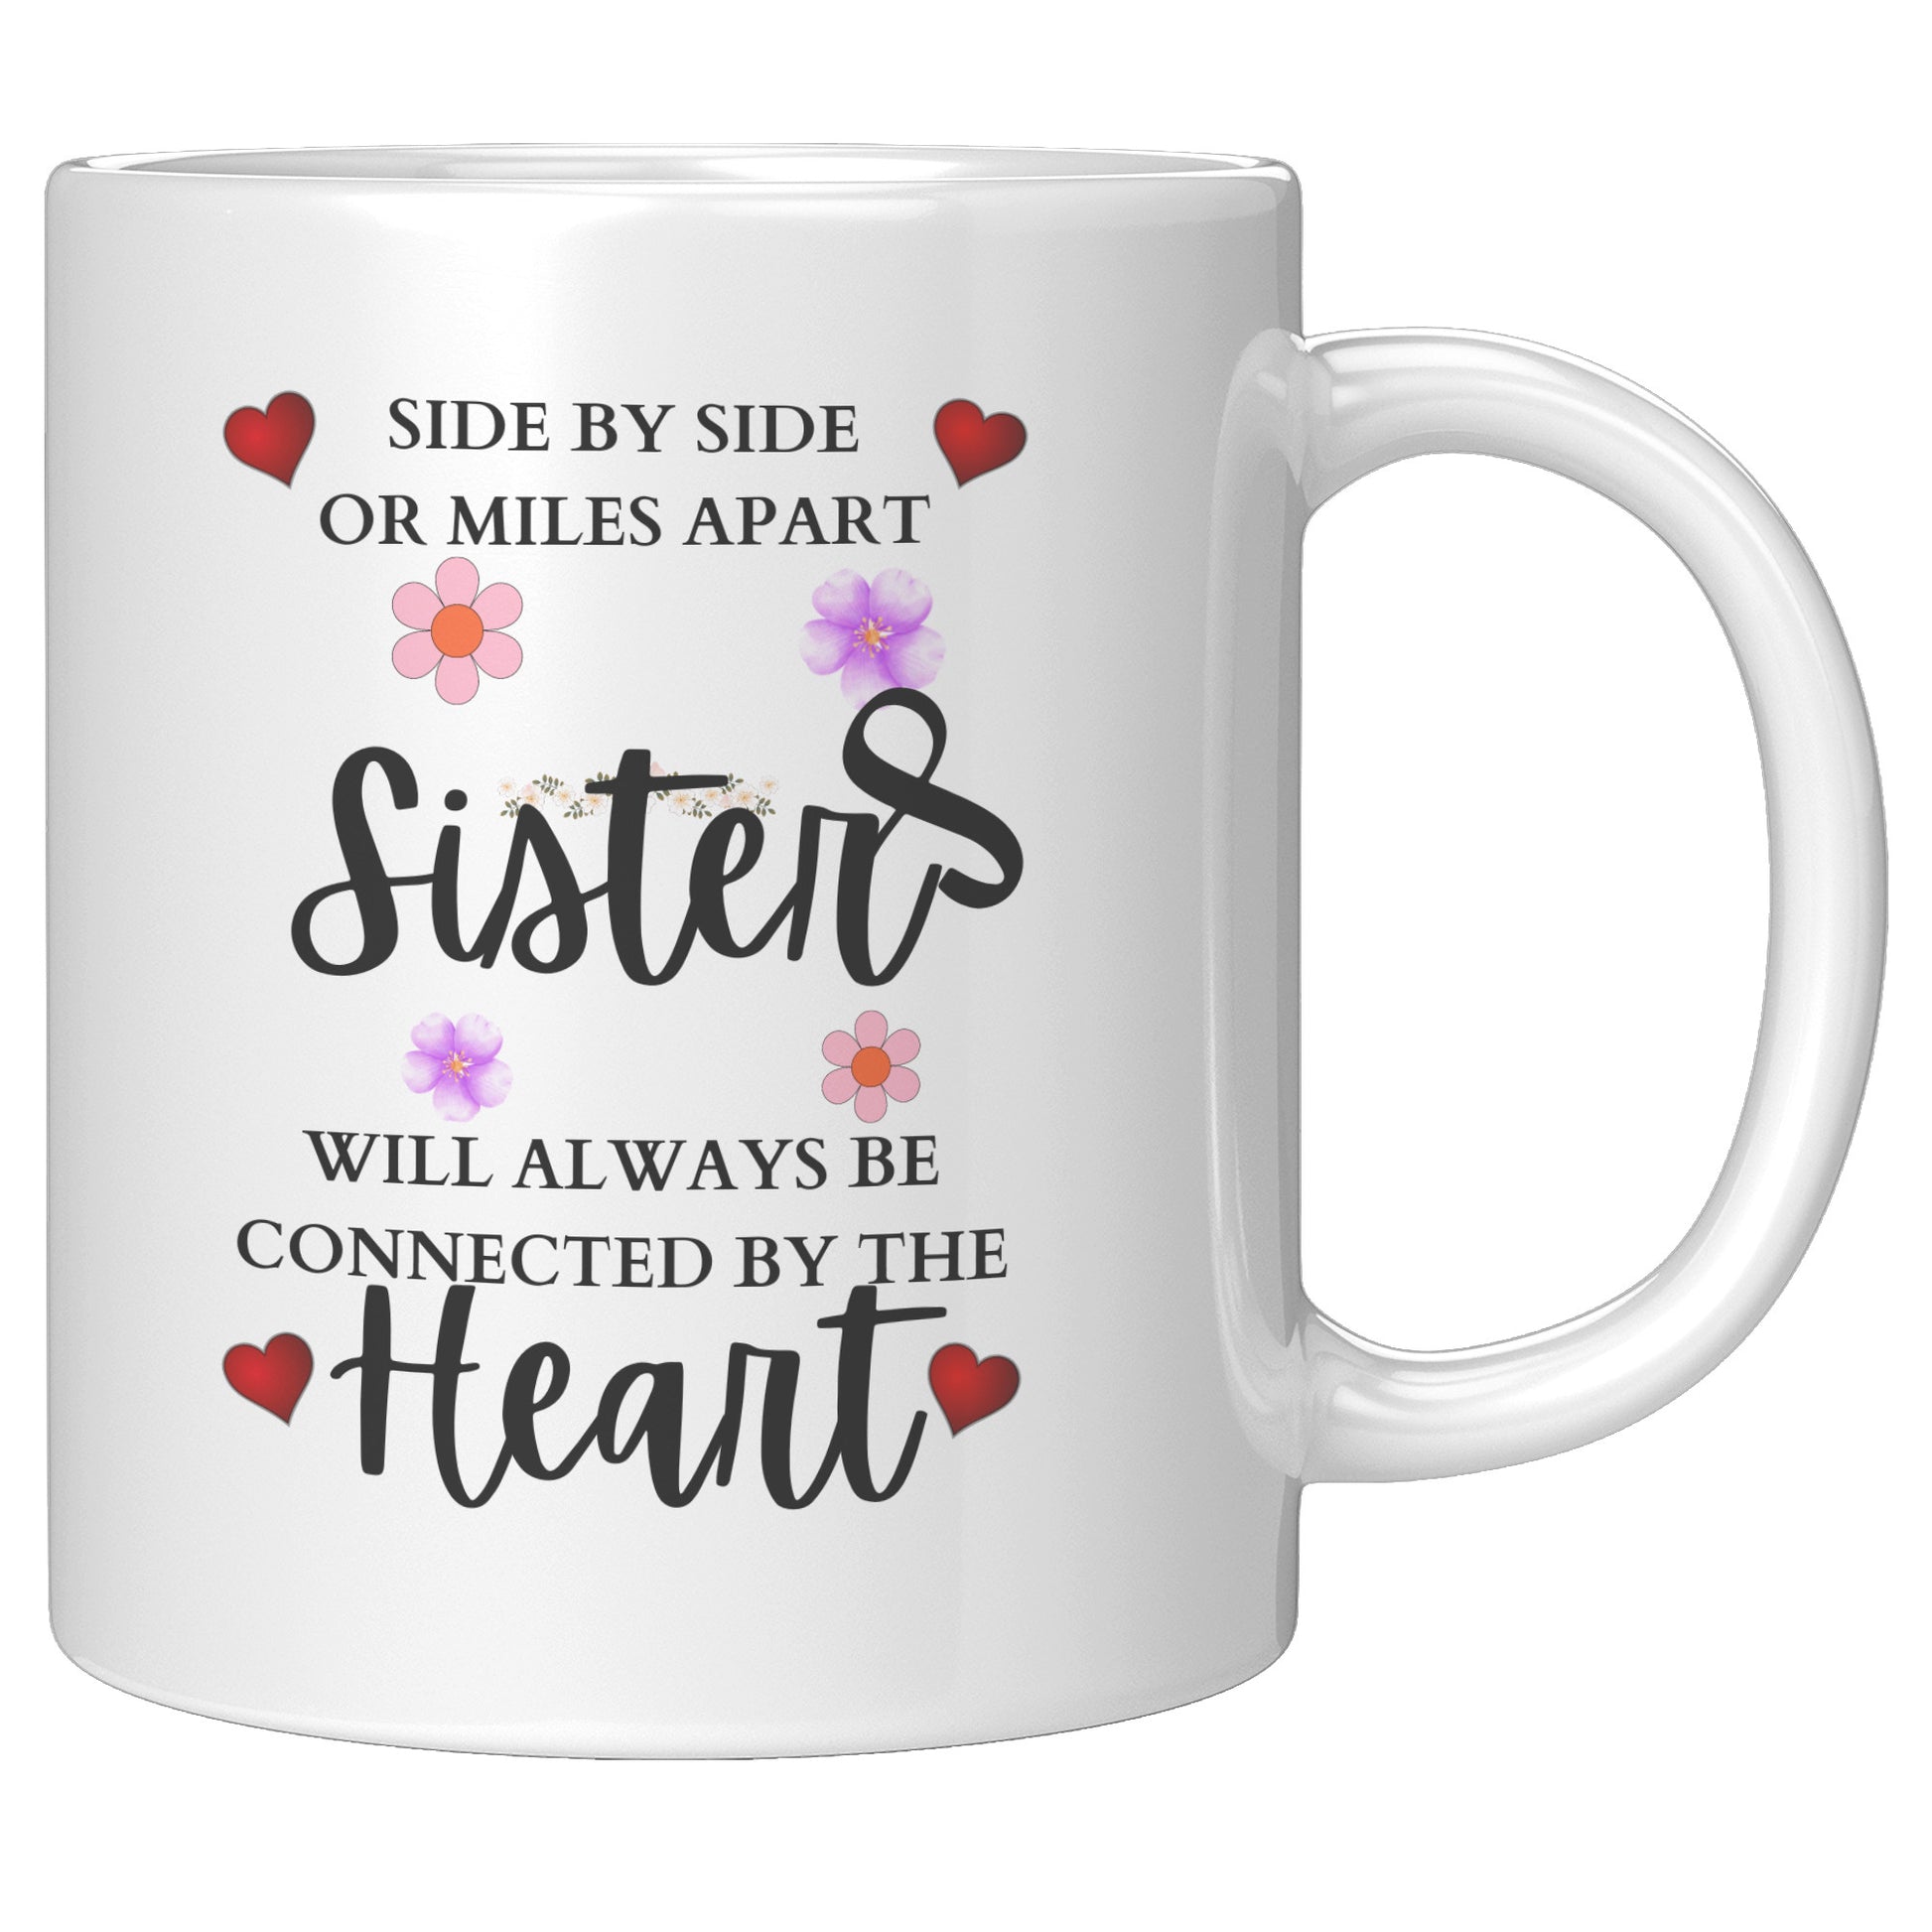 Side By Side Or Miles Apart - Sisters mugs